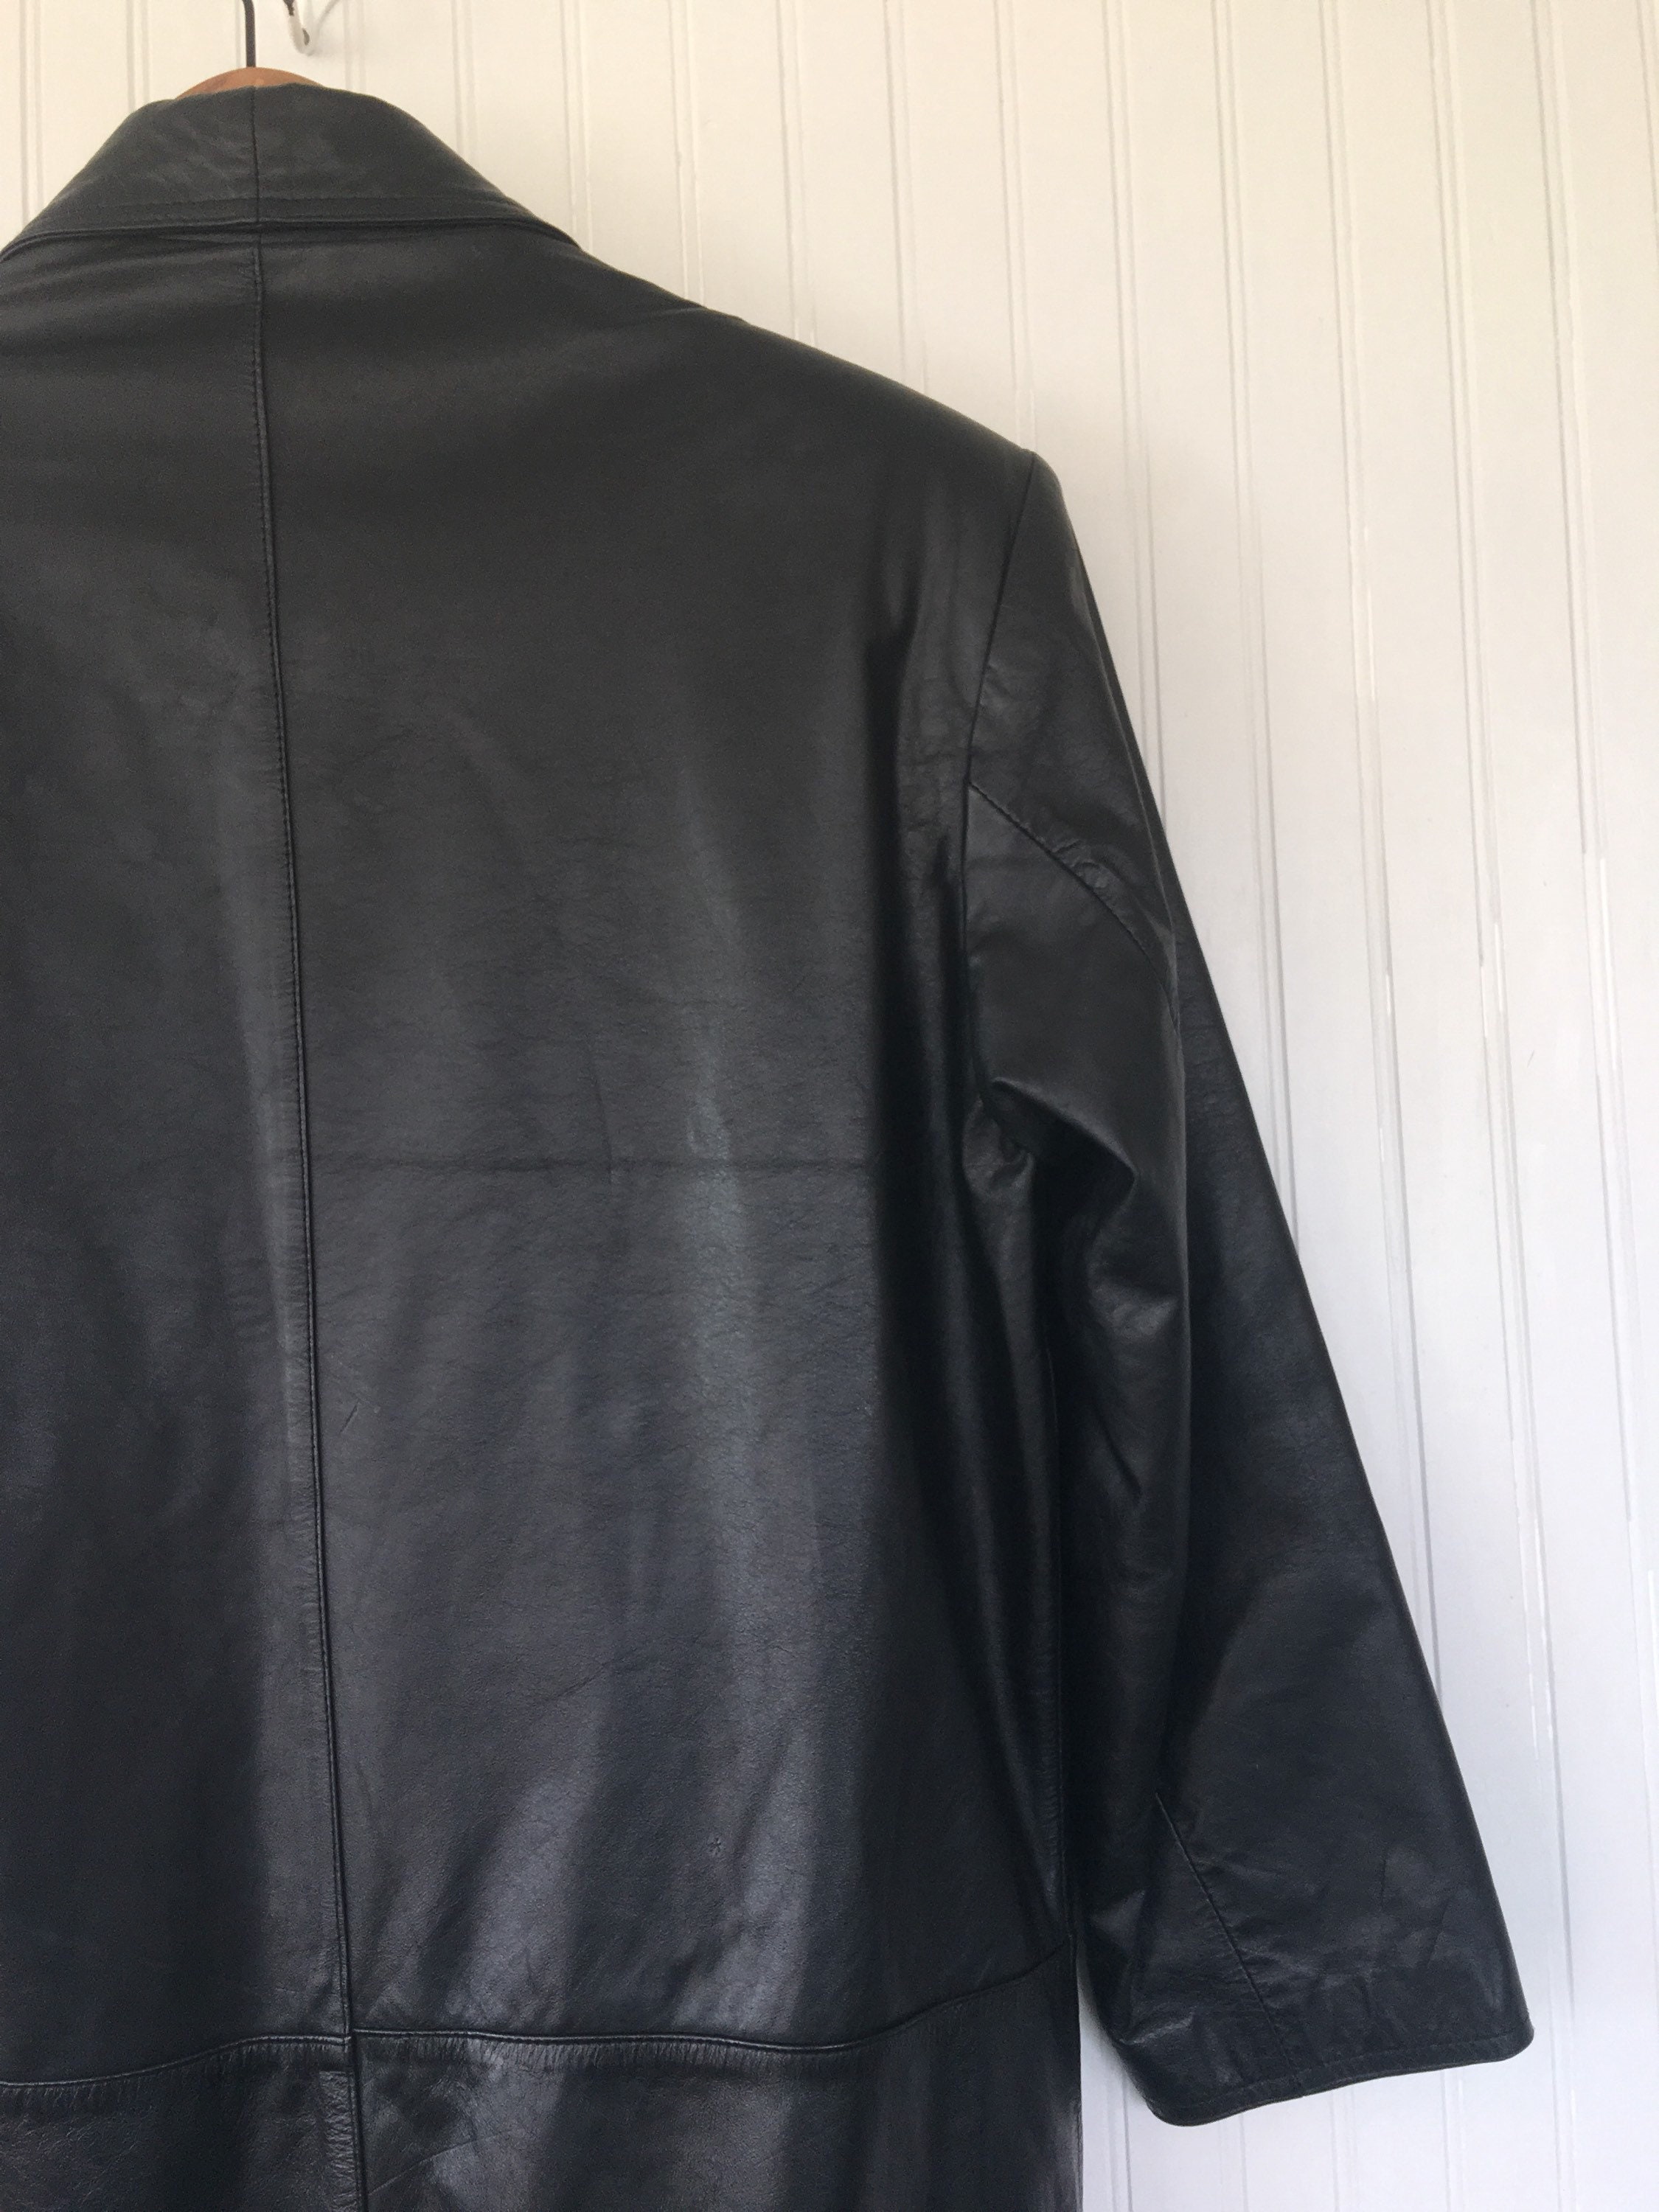 Vintage Black Leather Trench Coat Size Small S Medium Med M Jacket ...